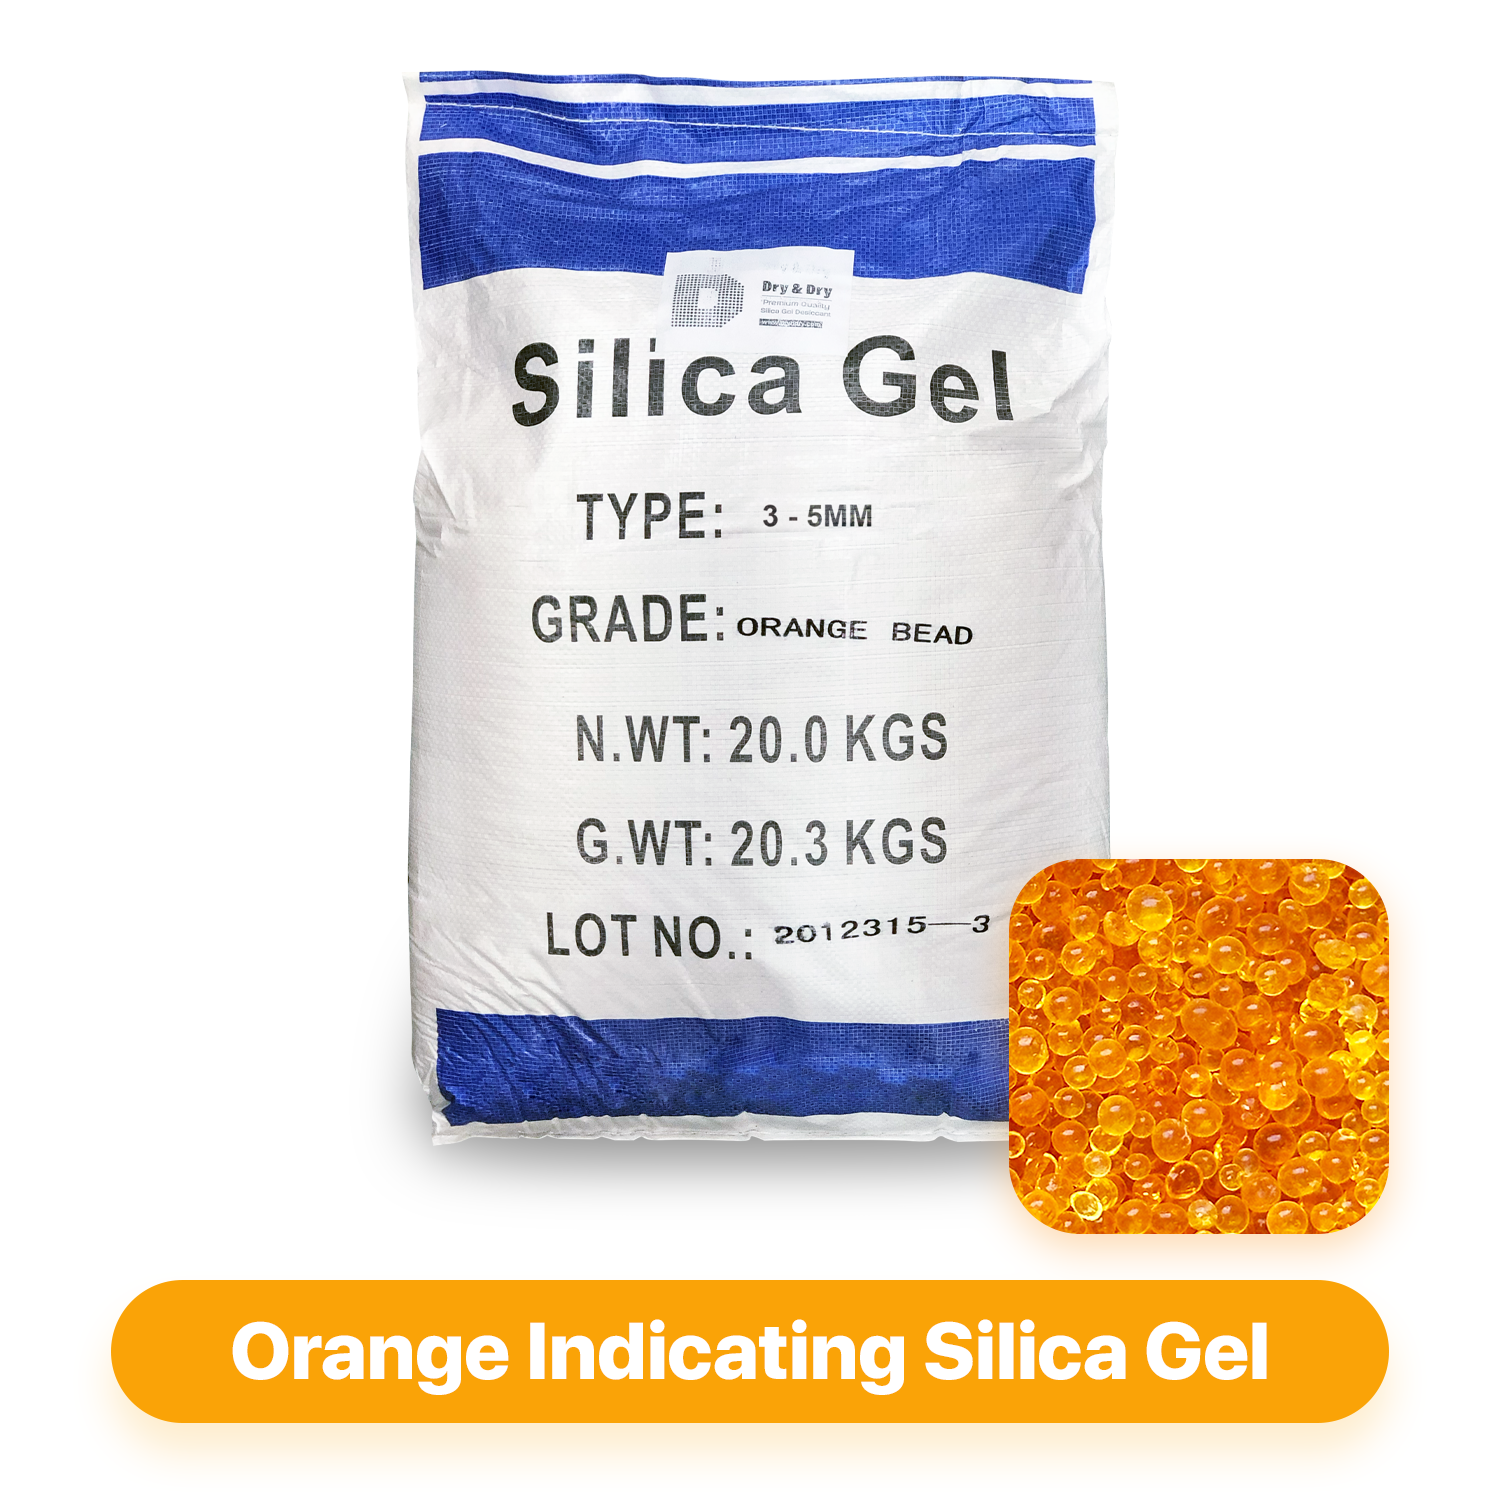 (44 LBS) "Dry & Dry" Premium Orange Indicating Silica Gel Desiccant Beads